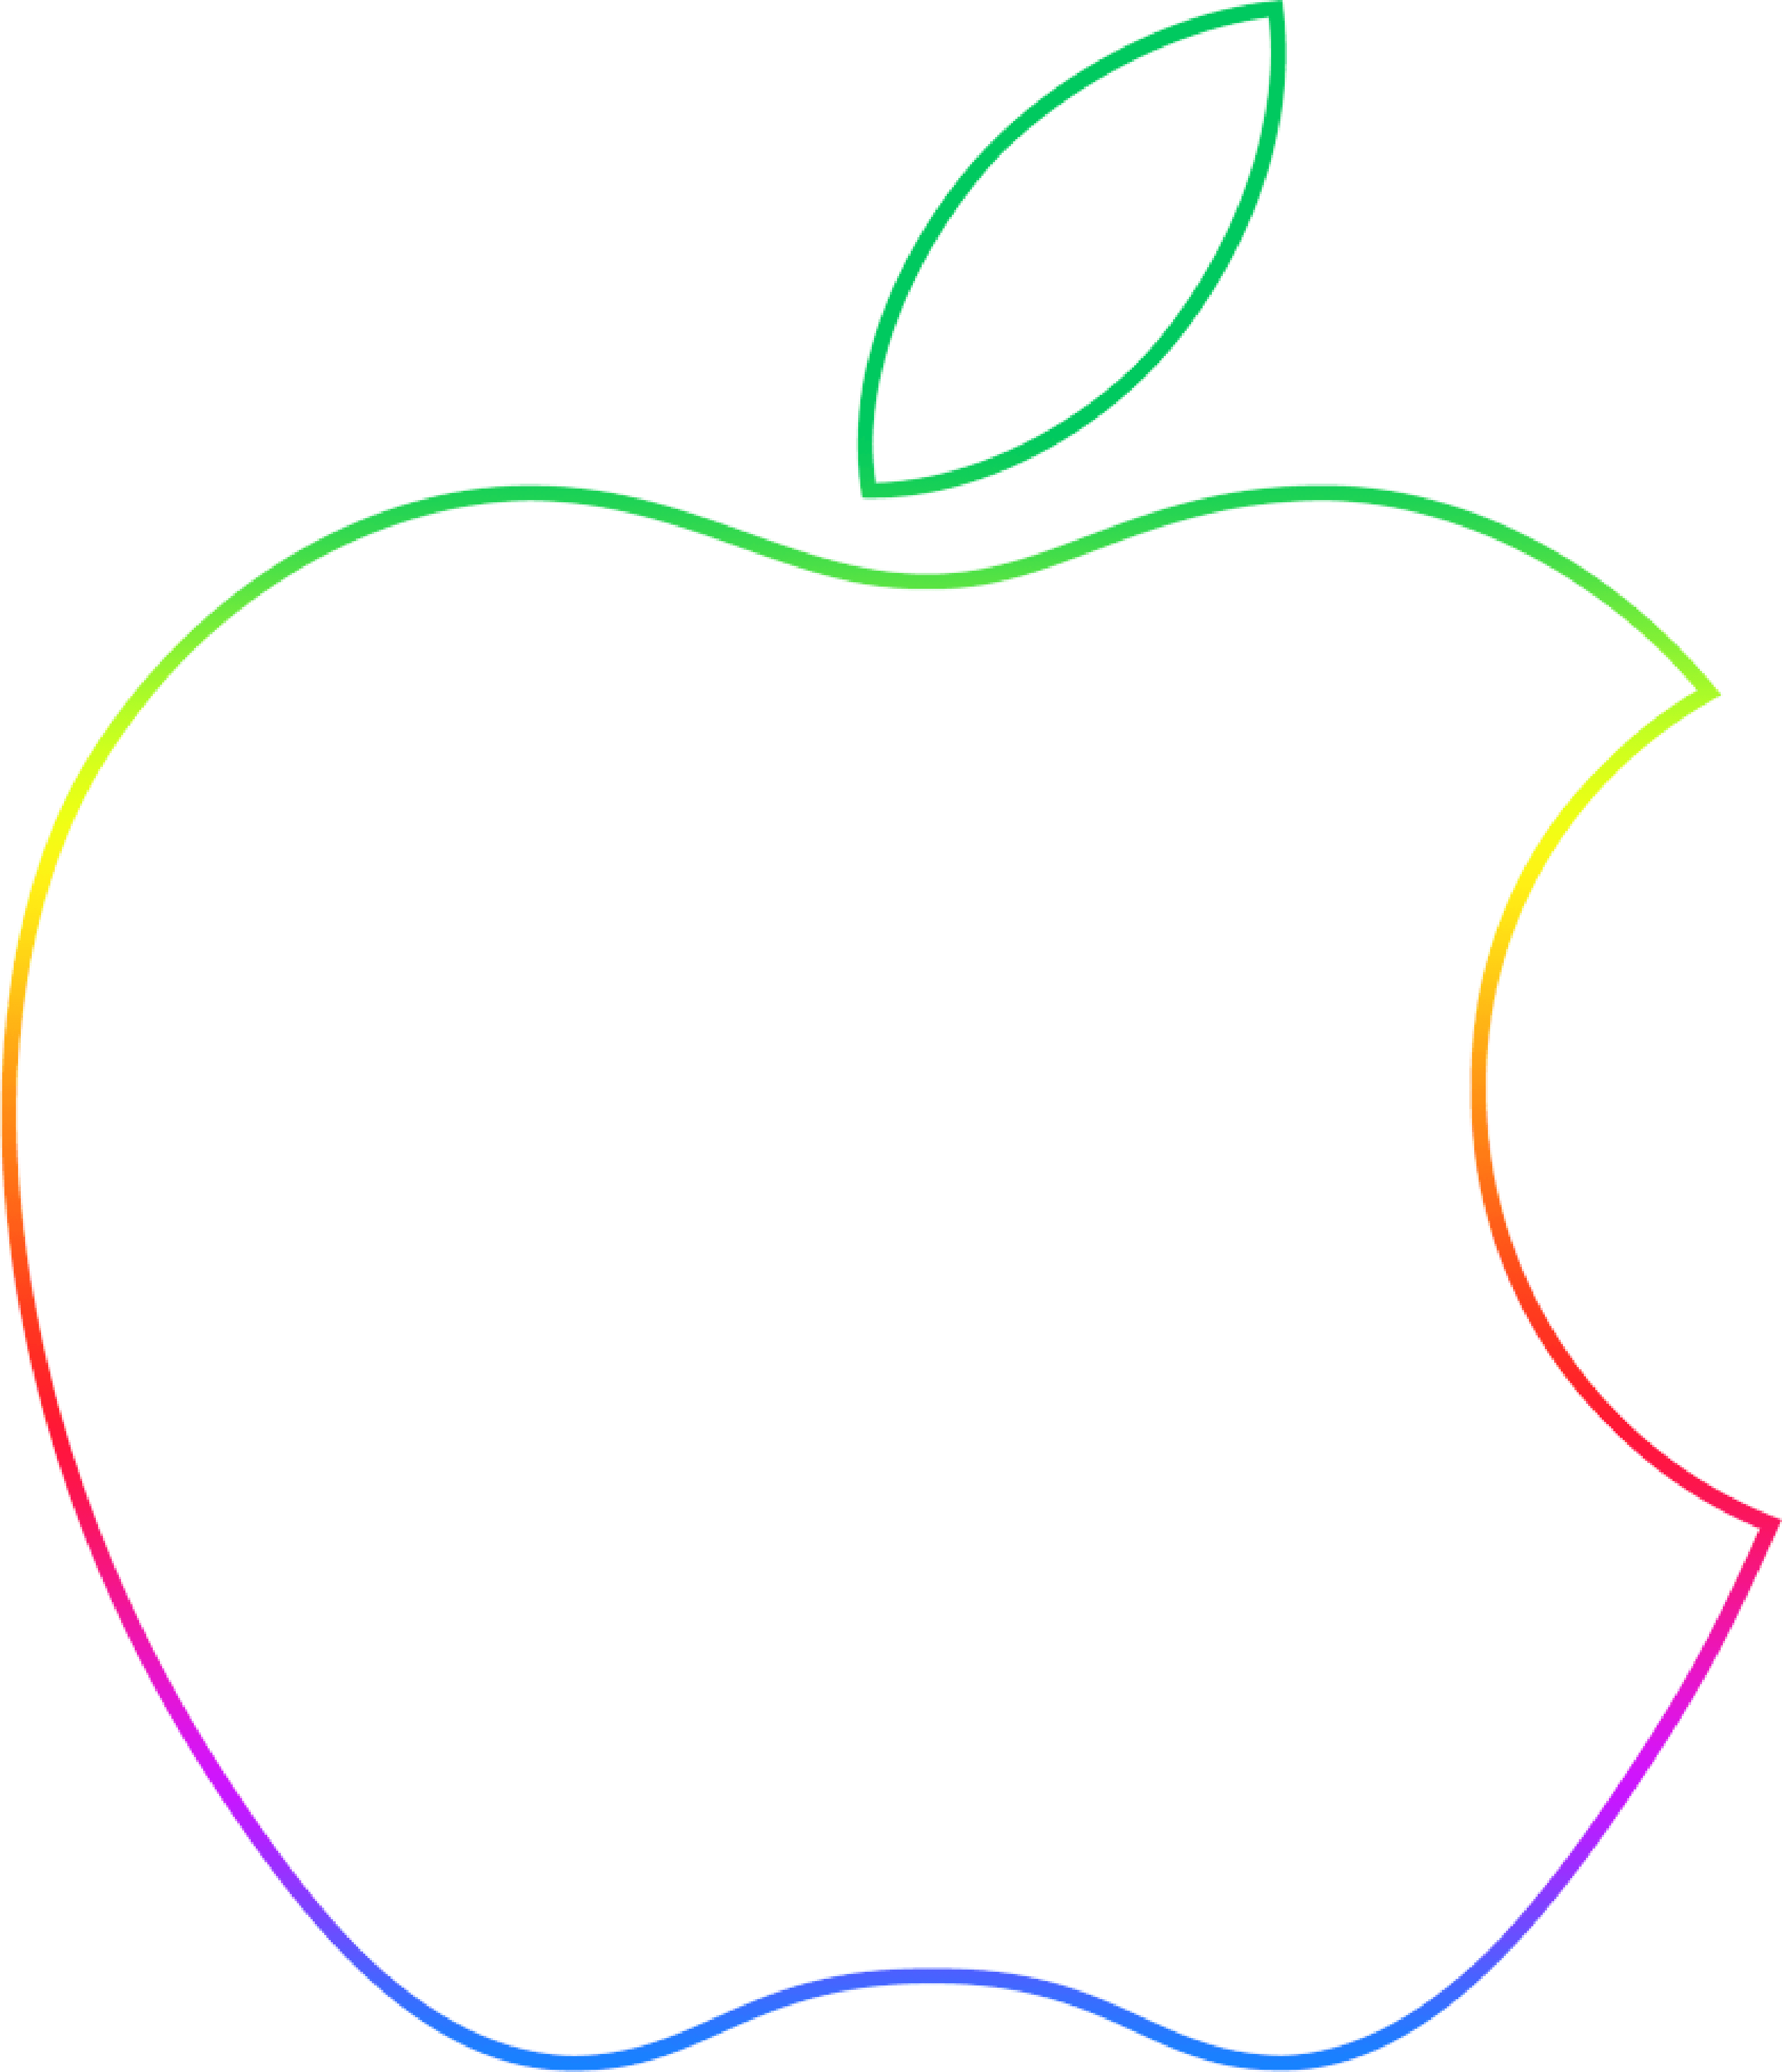 2016 New Apple Logo - Apple Logo Vector 10. An Image Hub